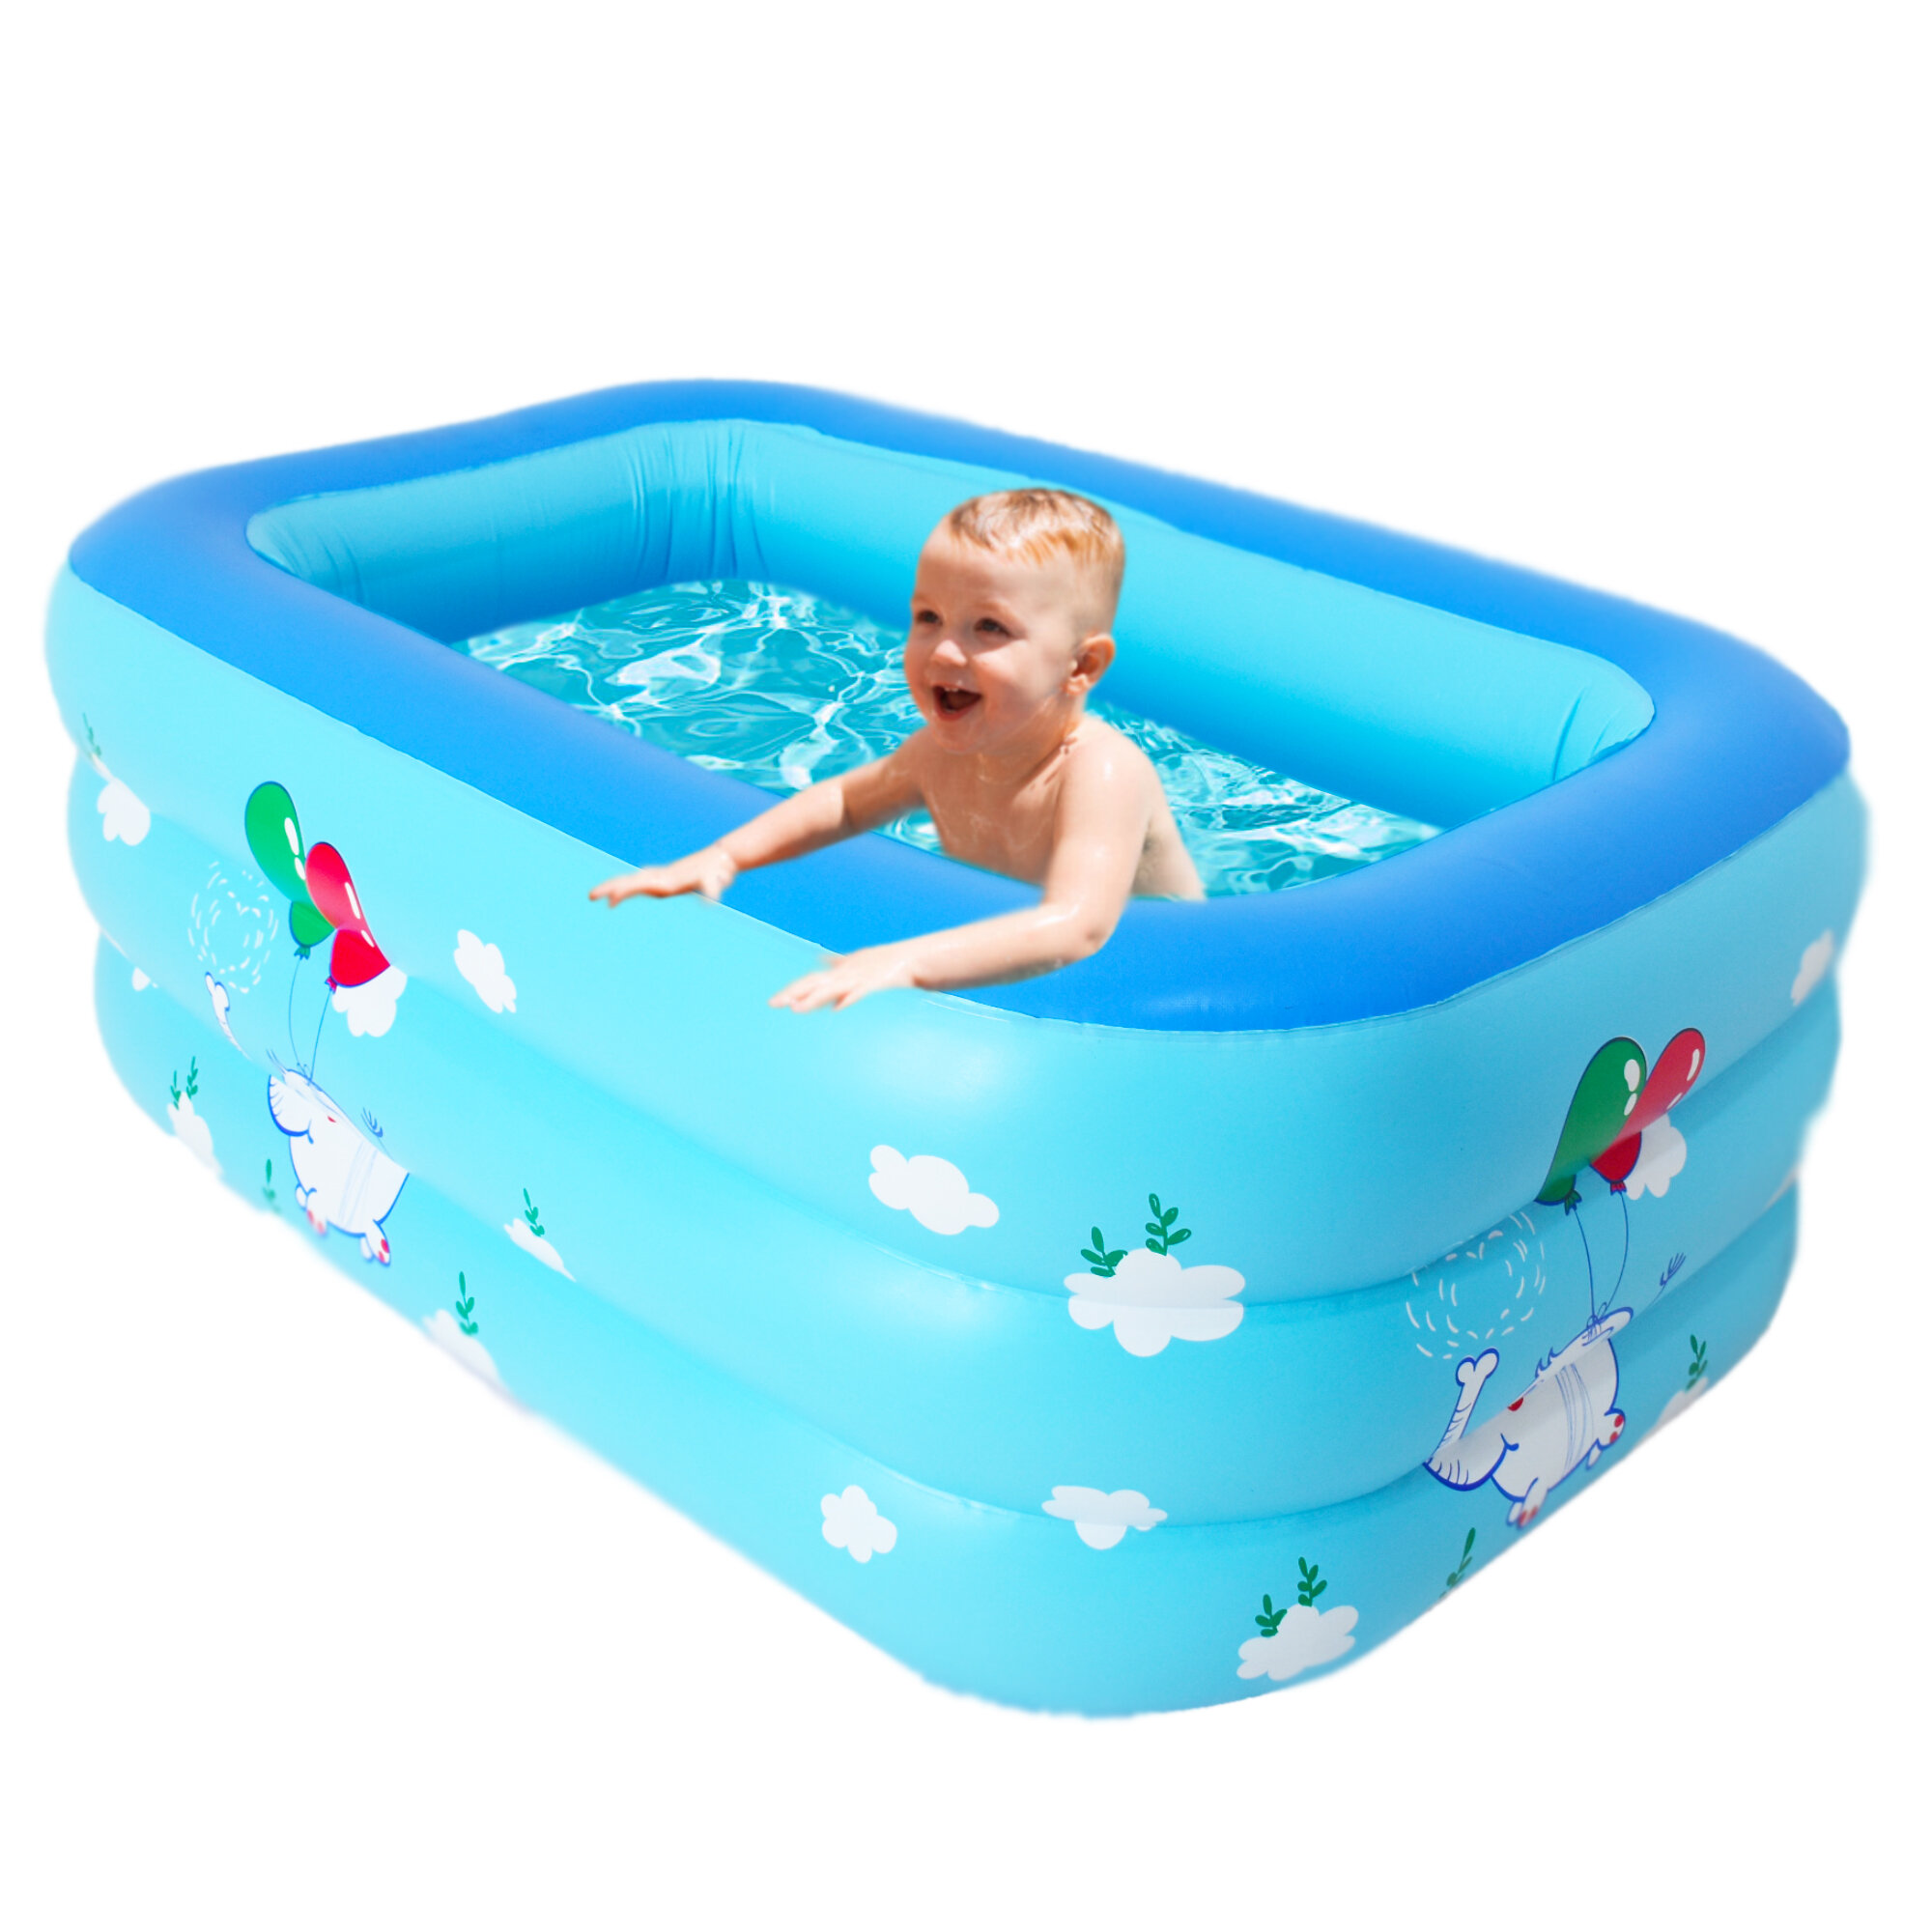 BabySPA Home Spa Inflatable Pool (150 x 100 x 53cm)